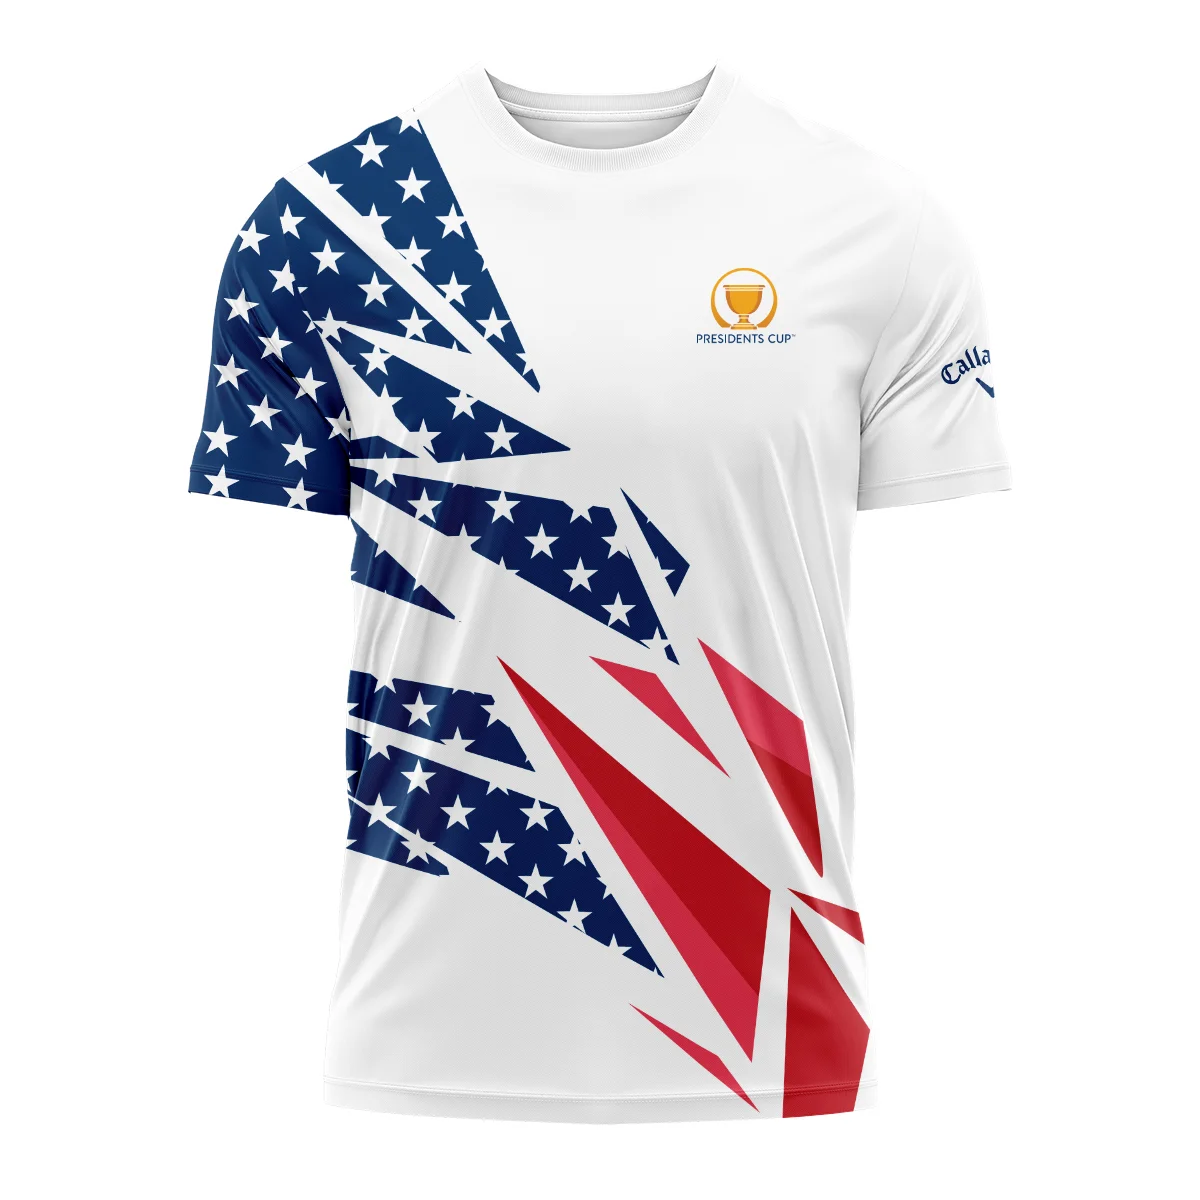 Flag American Cup Presidents Cup Callaway Zipper Hoodie Shirt All Over Prints QTPR2606A1CLWZHD